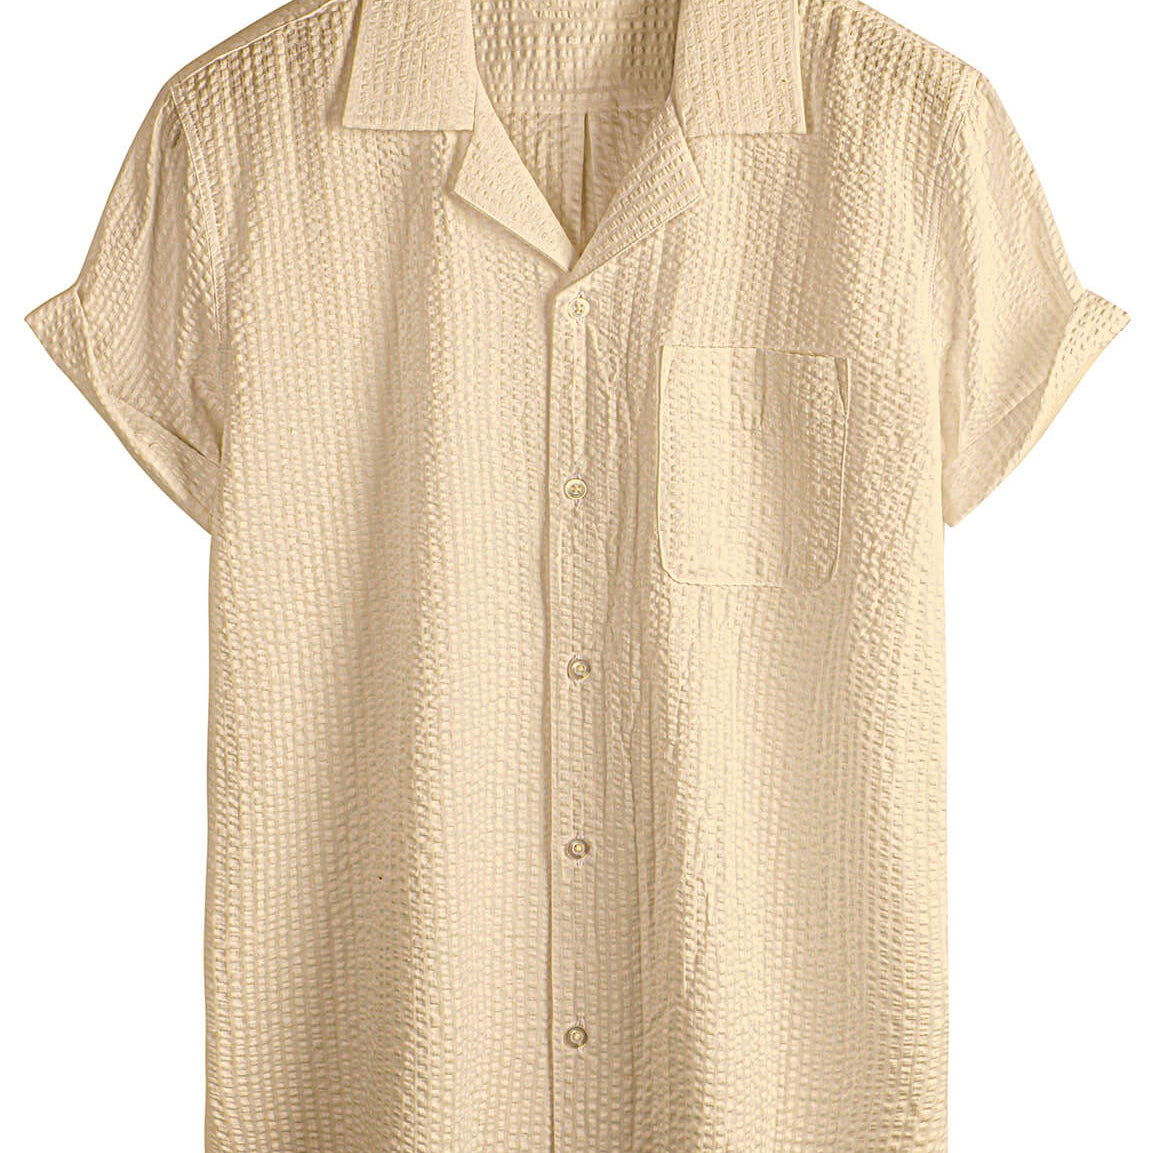 Men's Cotton Pocket Casual Solid Color Beach Summer Button Up Short Sleeve Shirt